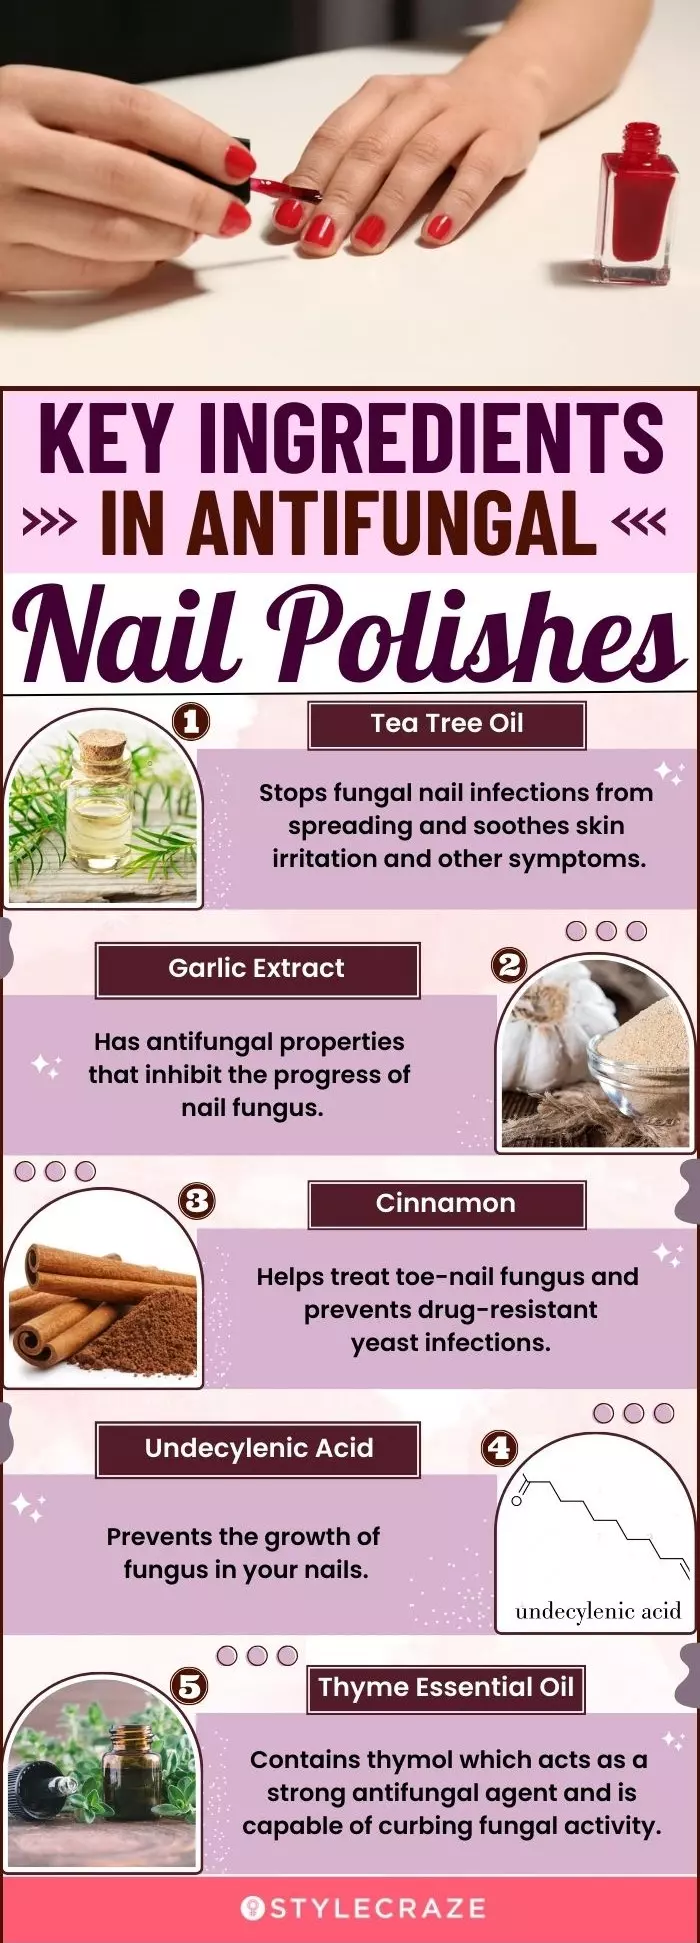 Key Ingredients In Antifungal Nail Polishes (infographic)